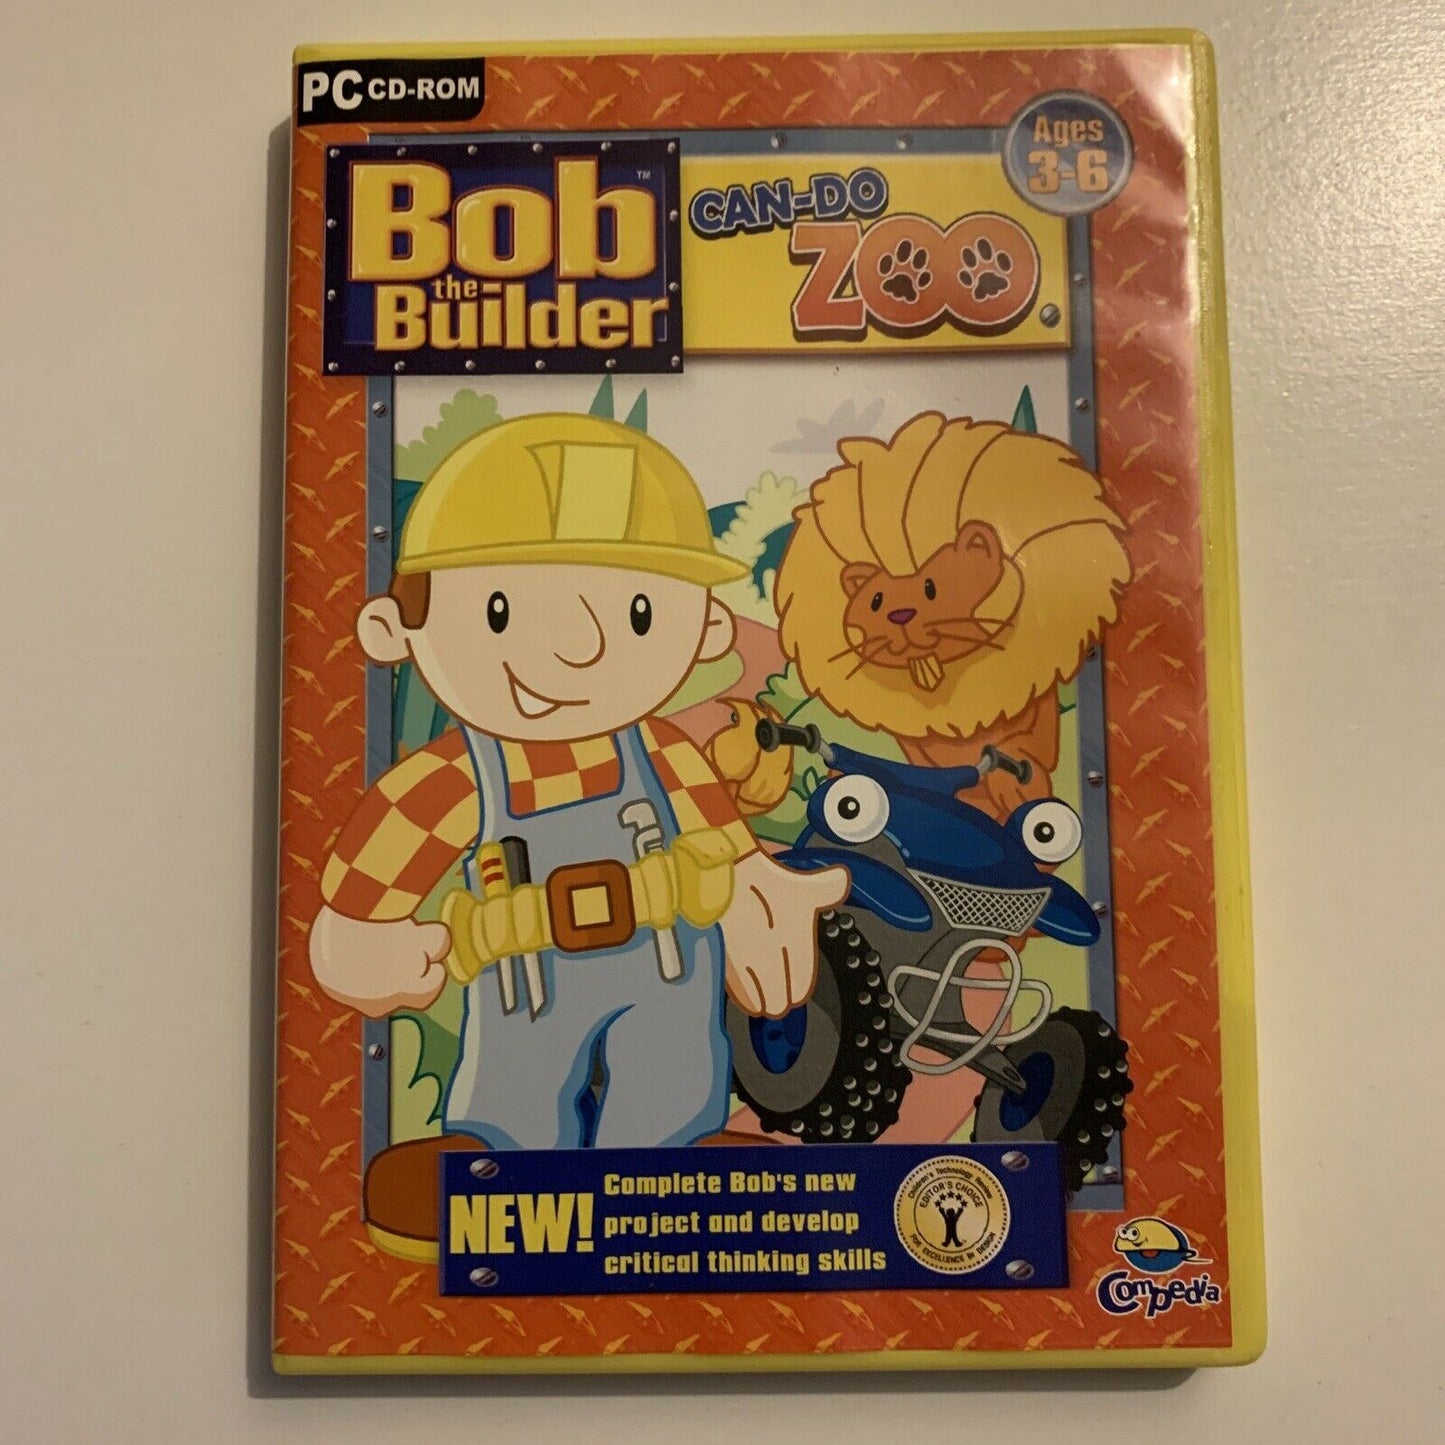 Bob The Builder - Can-Do Zoo PC CDROM Educational Video Game – Retro Unit